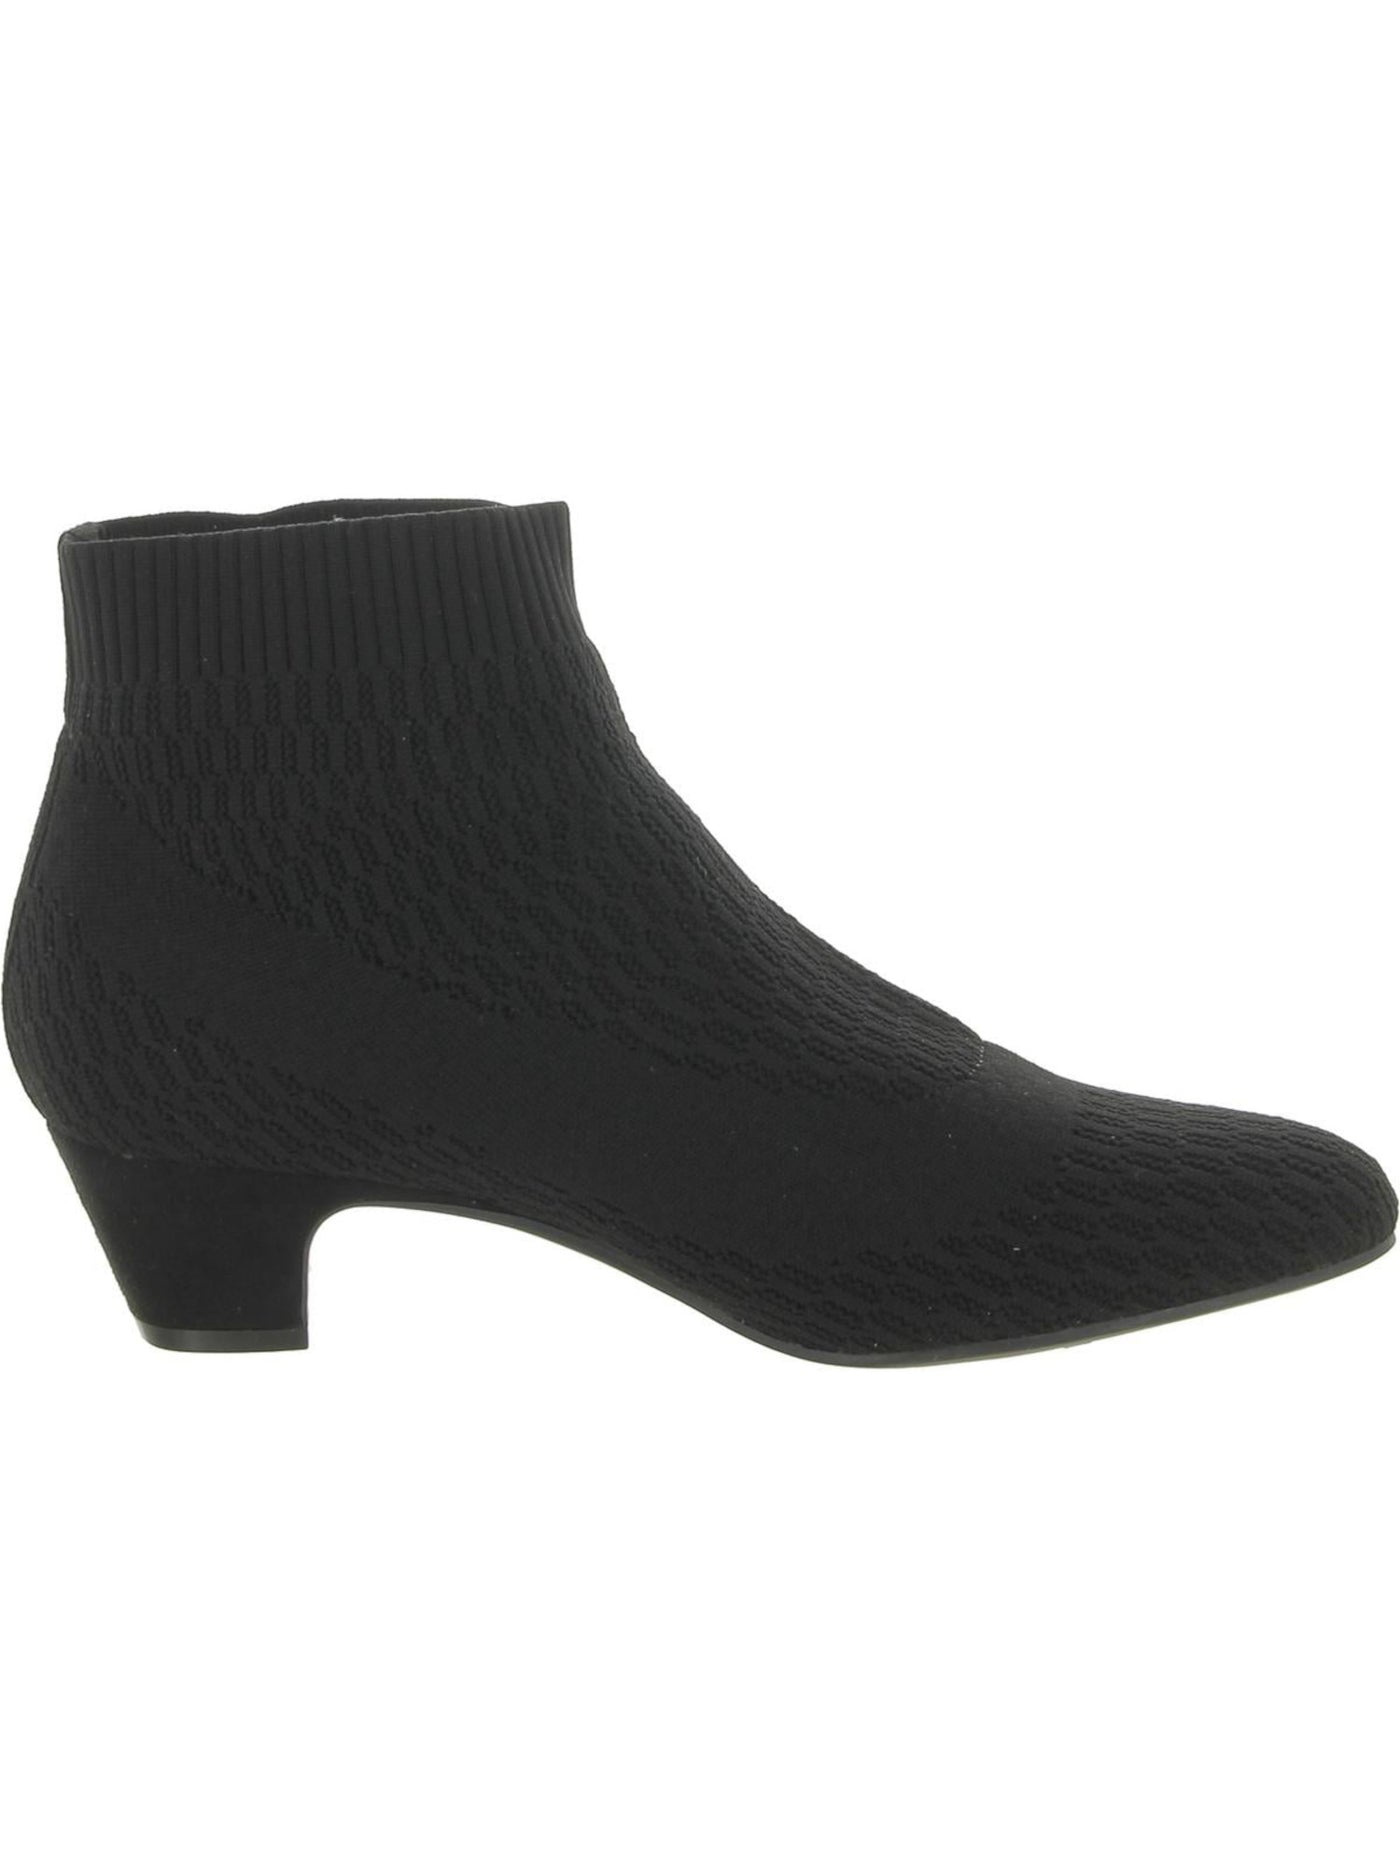 IMPO Womens Black Knit Cushioned Stretch Gewel Almond Toe Dress Booties 8 M